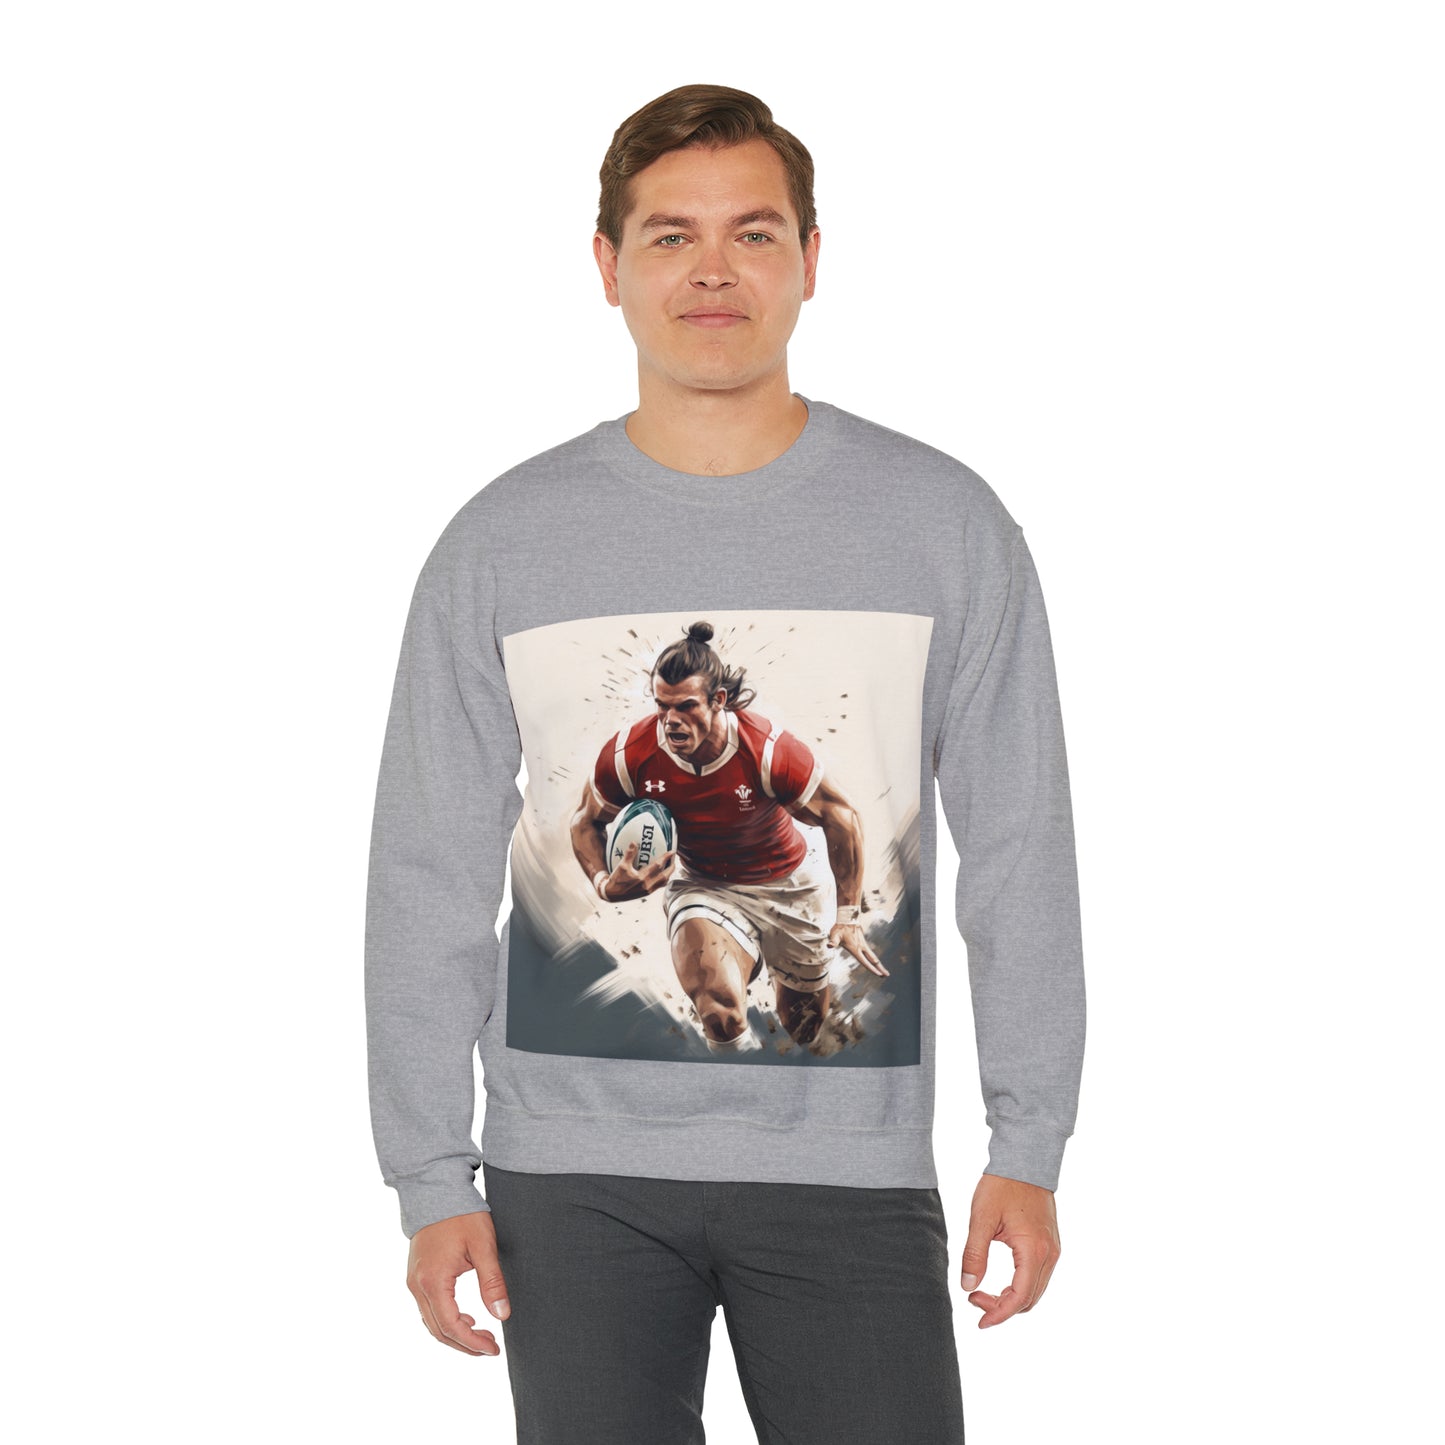 Running Bale - light sweatshirts